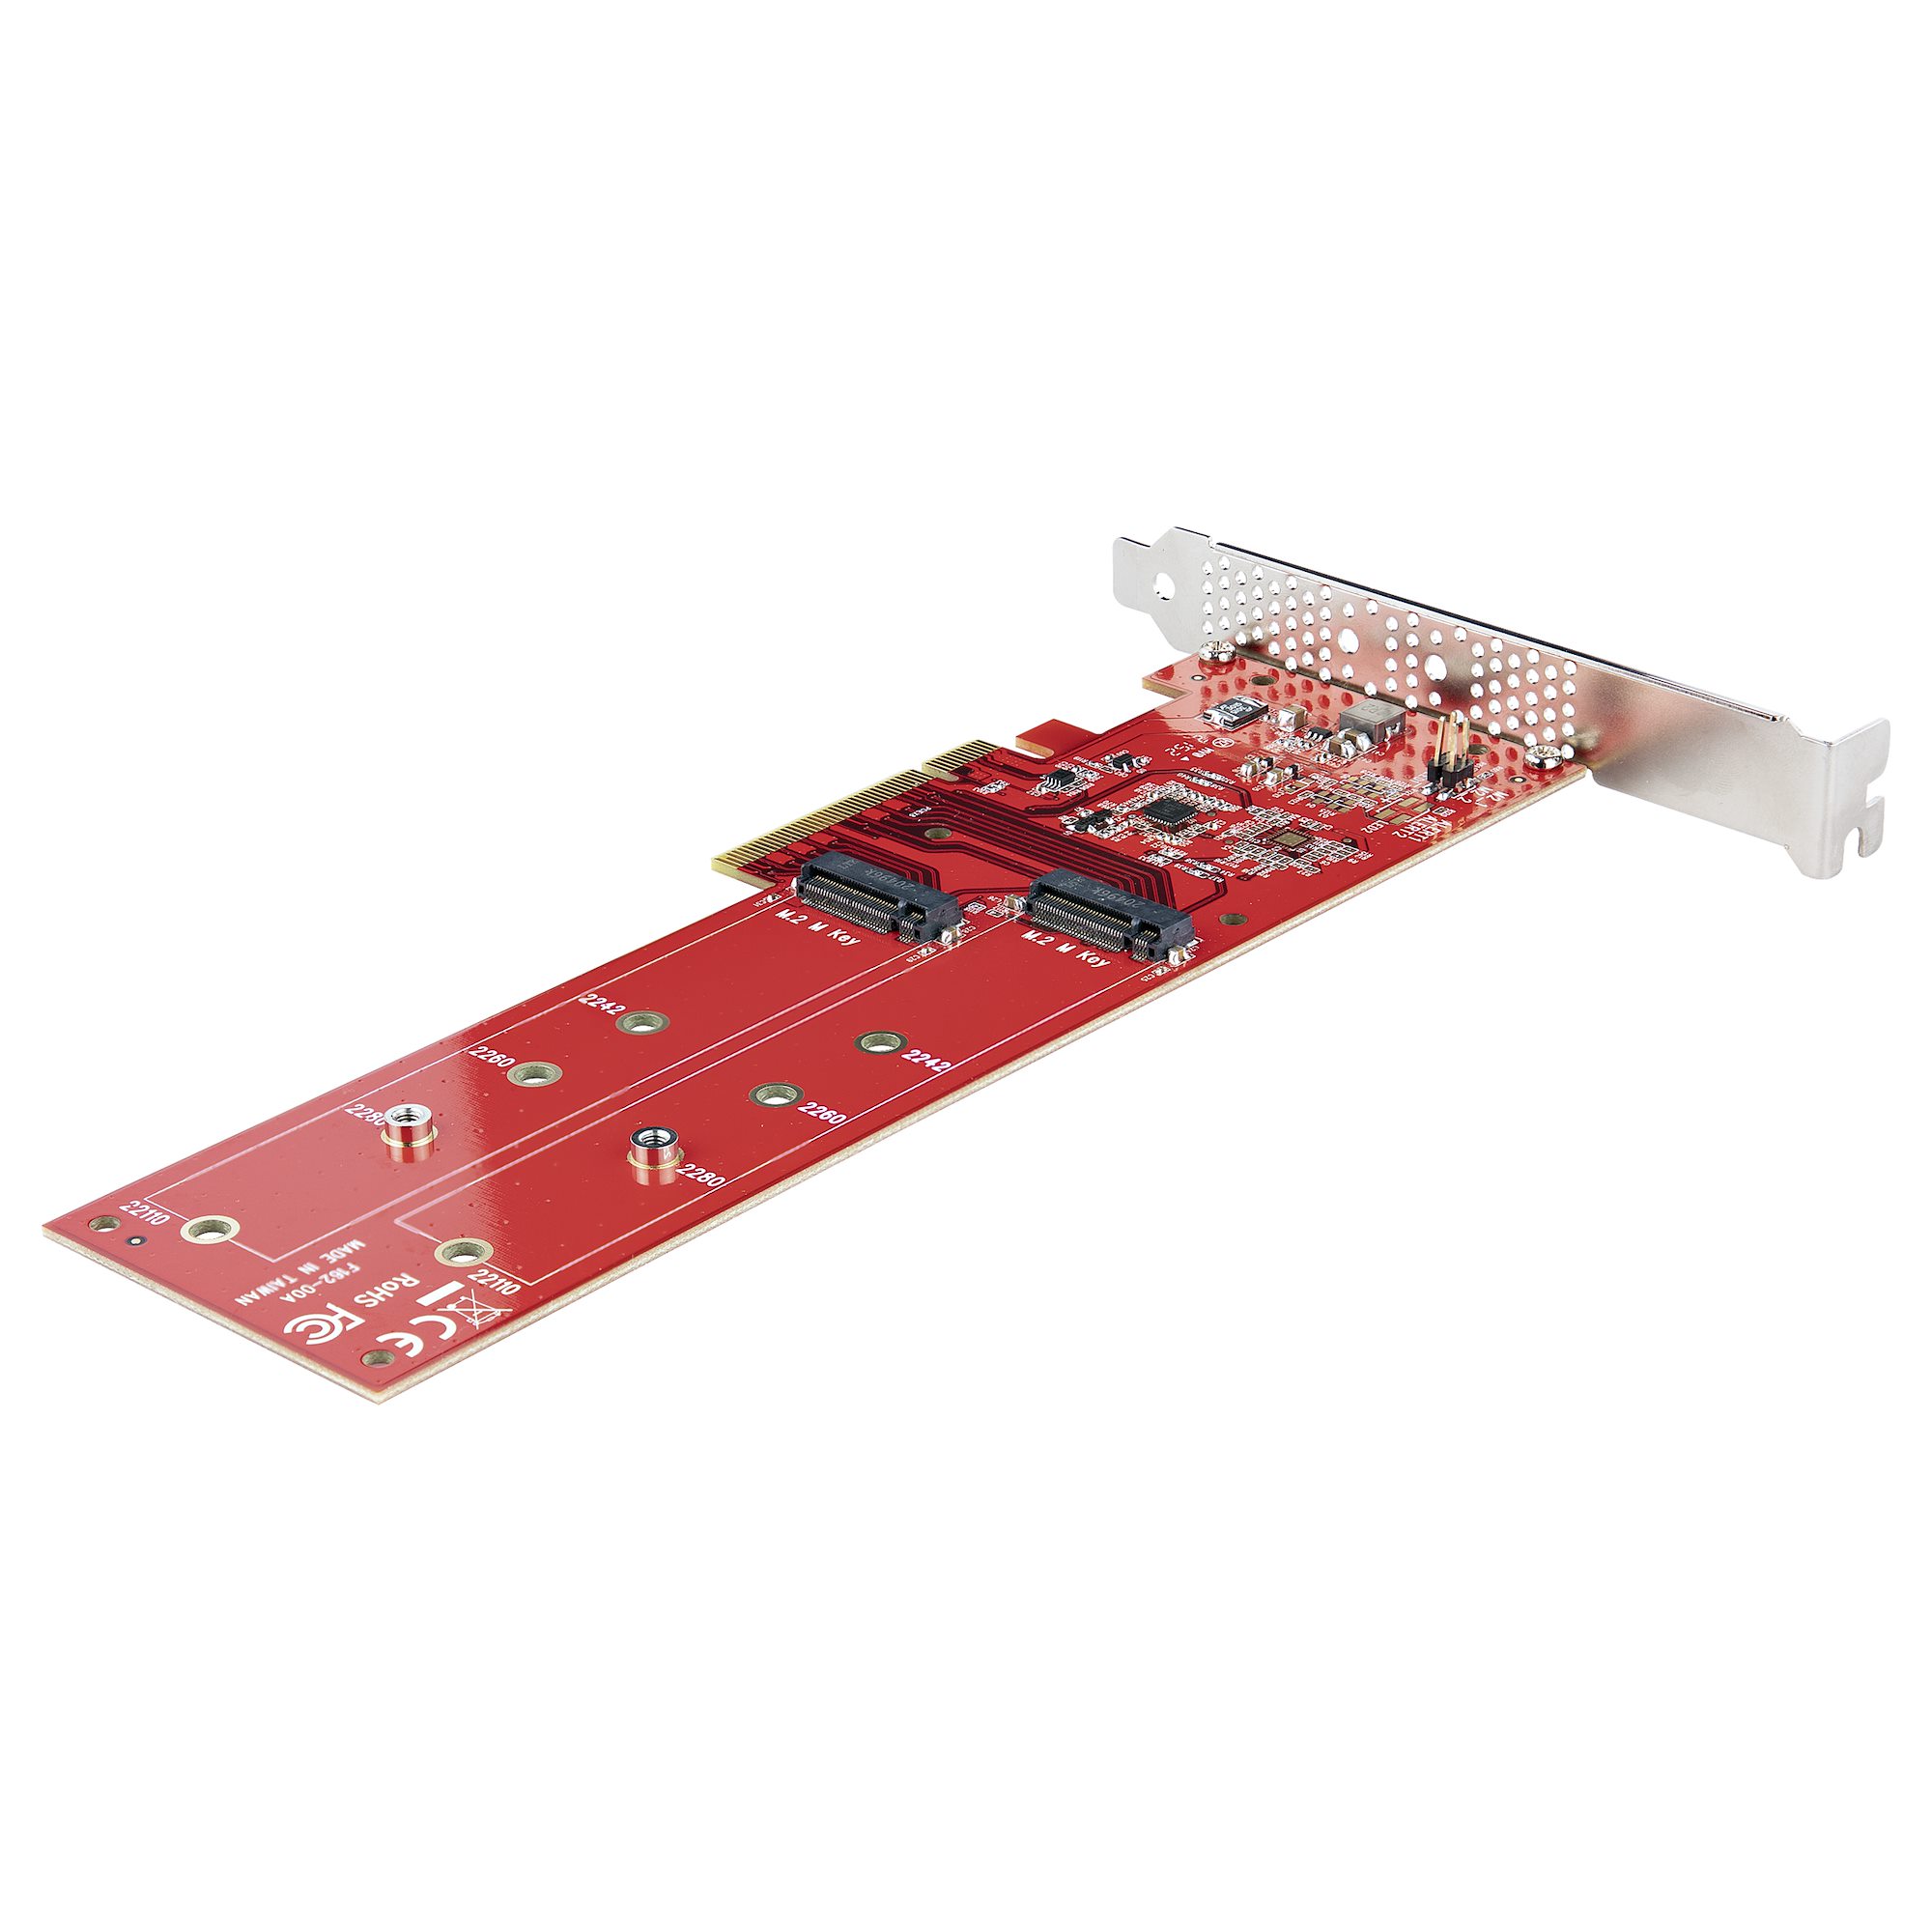  Ableconn PEXM2-130 Dual M.2 PCIe NVMe SSD Adapter Card - PCI  Express 3.0 x8 / x16 Support 2X M.2 NGFF (M-Key) PCIe NVMe SSD for Mac & PC  (ASMedia ASM2824 Switch) 